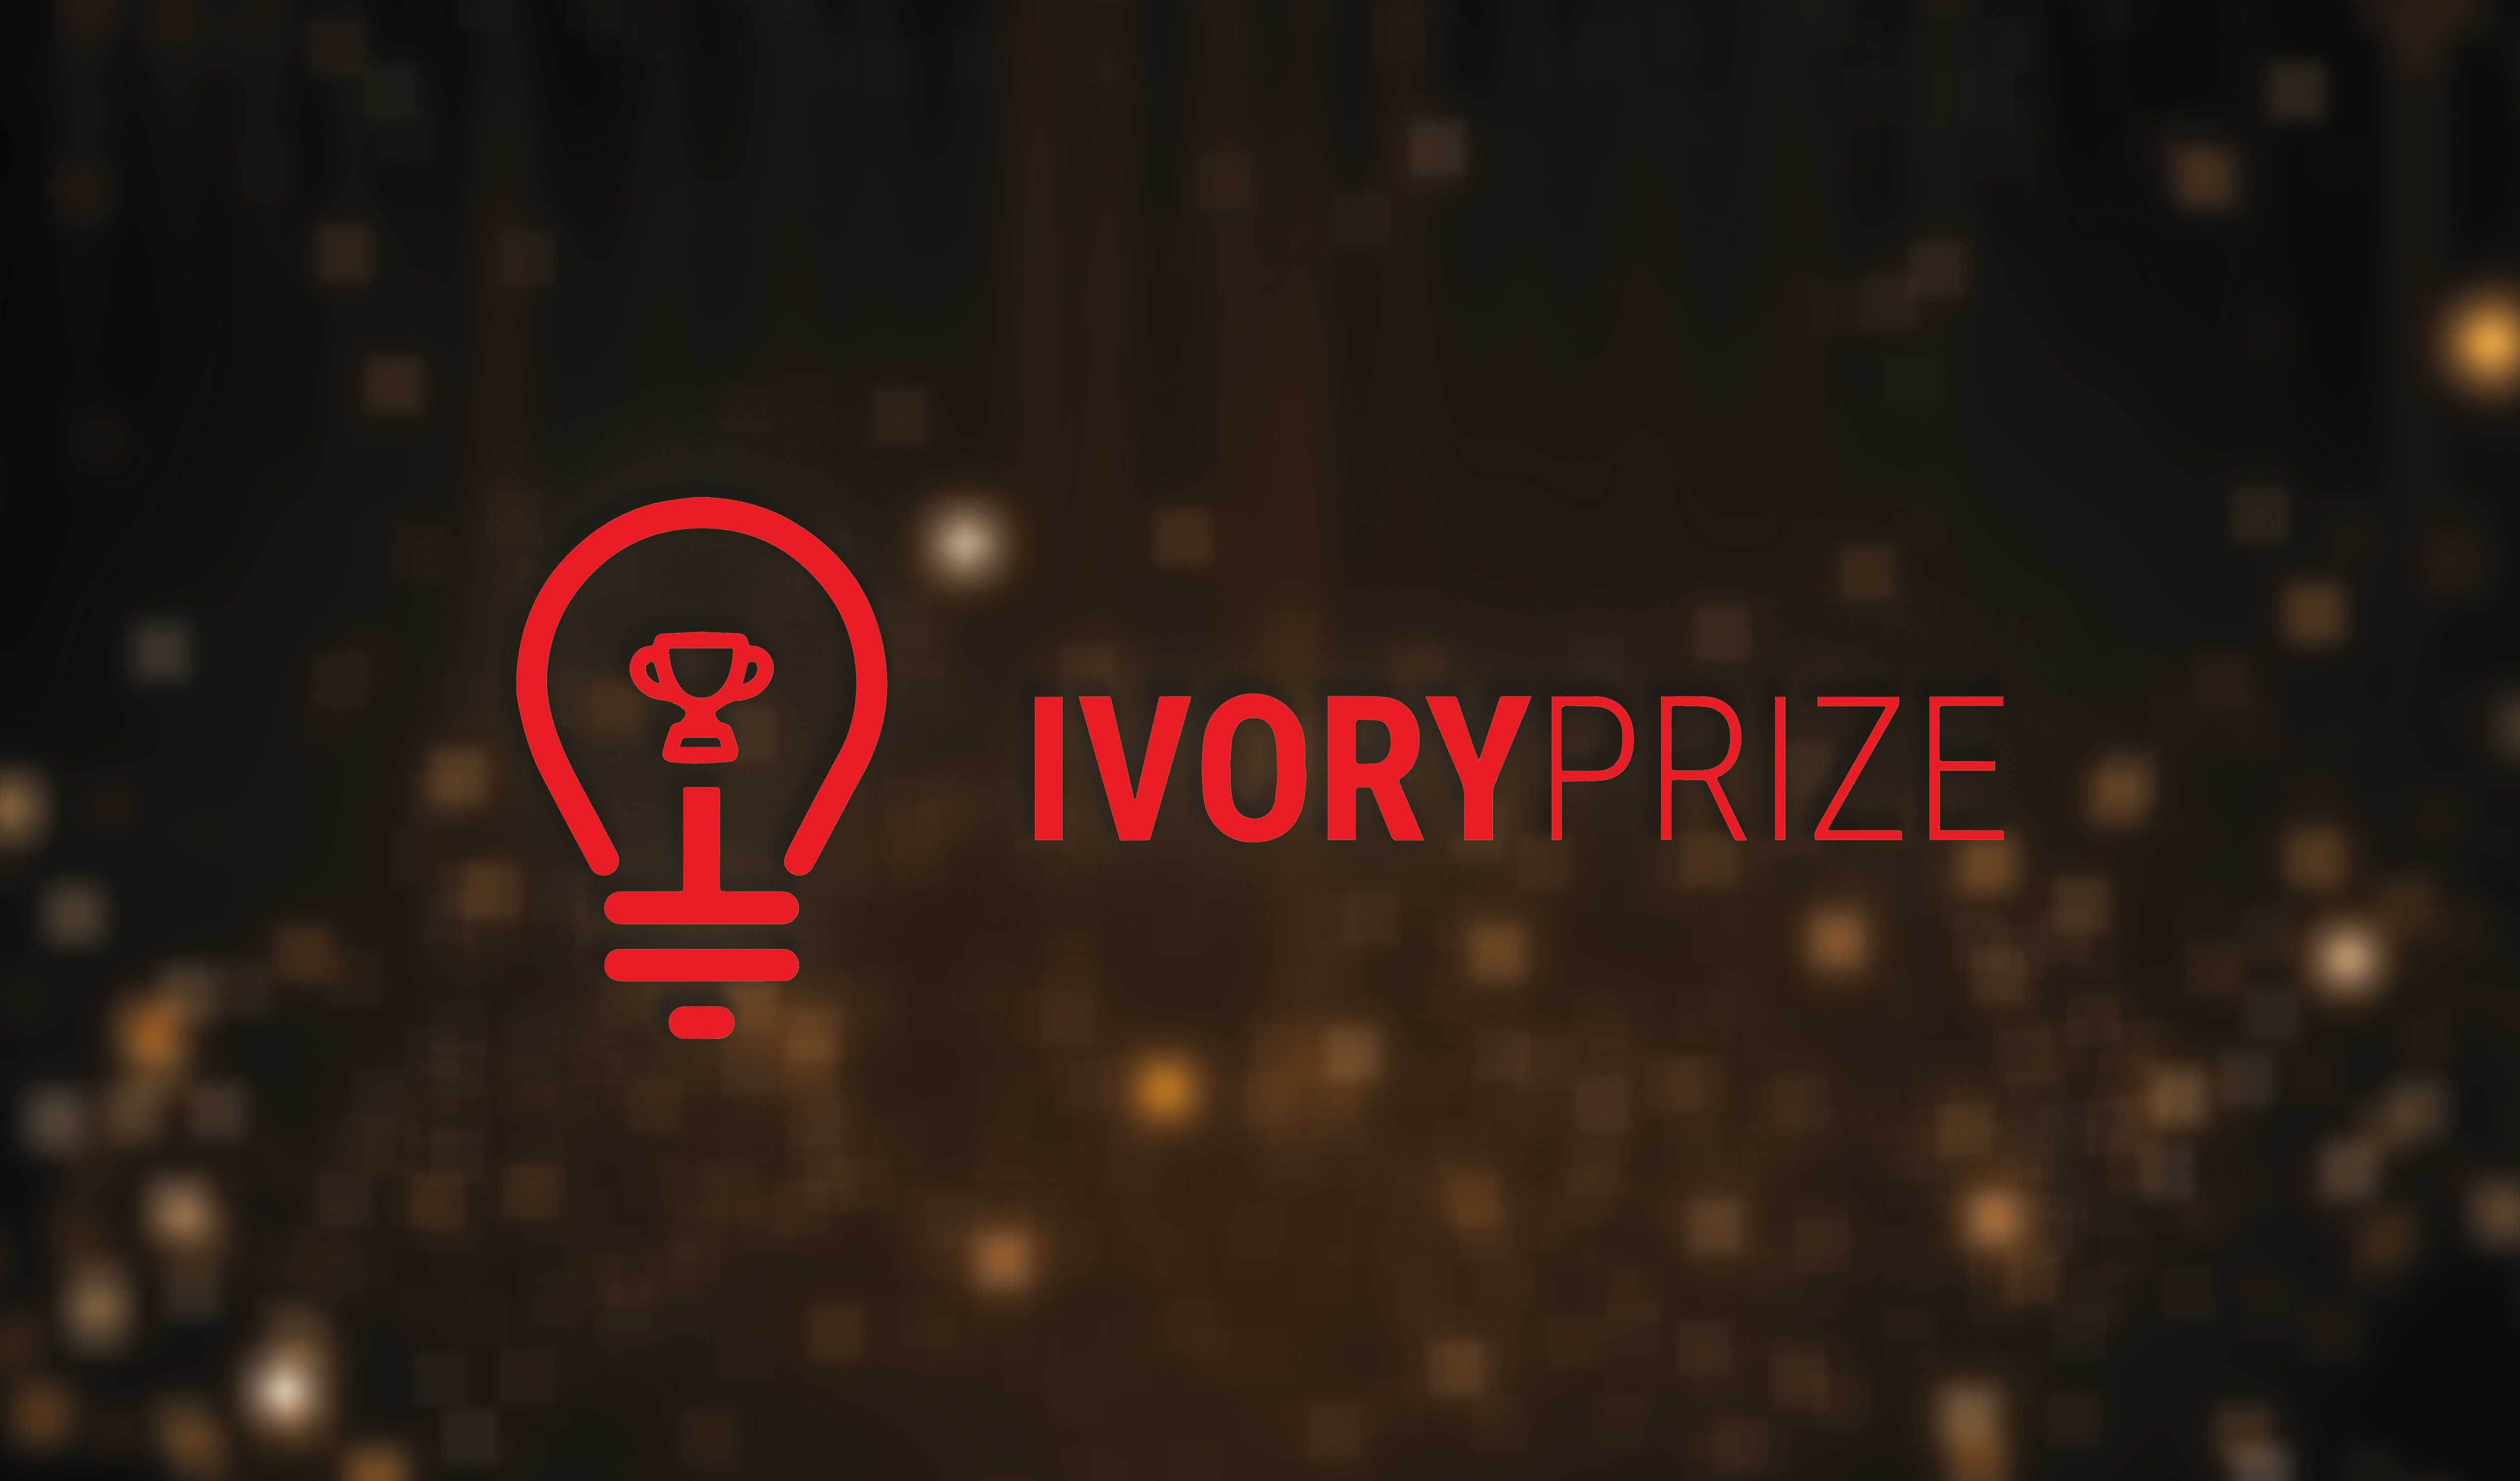 Ivory Prize awards logo with bronze background